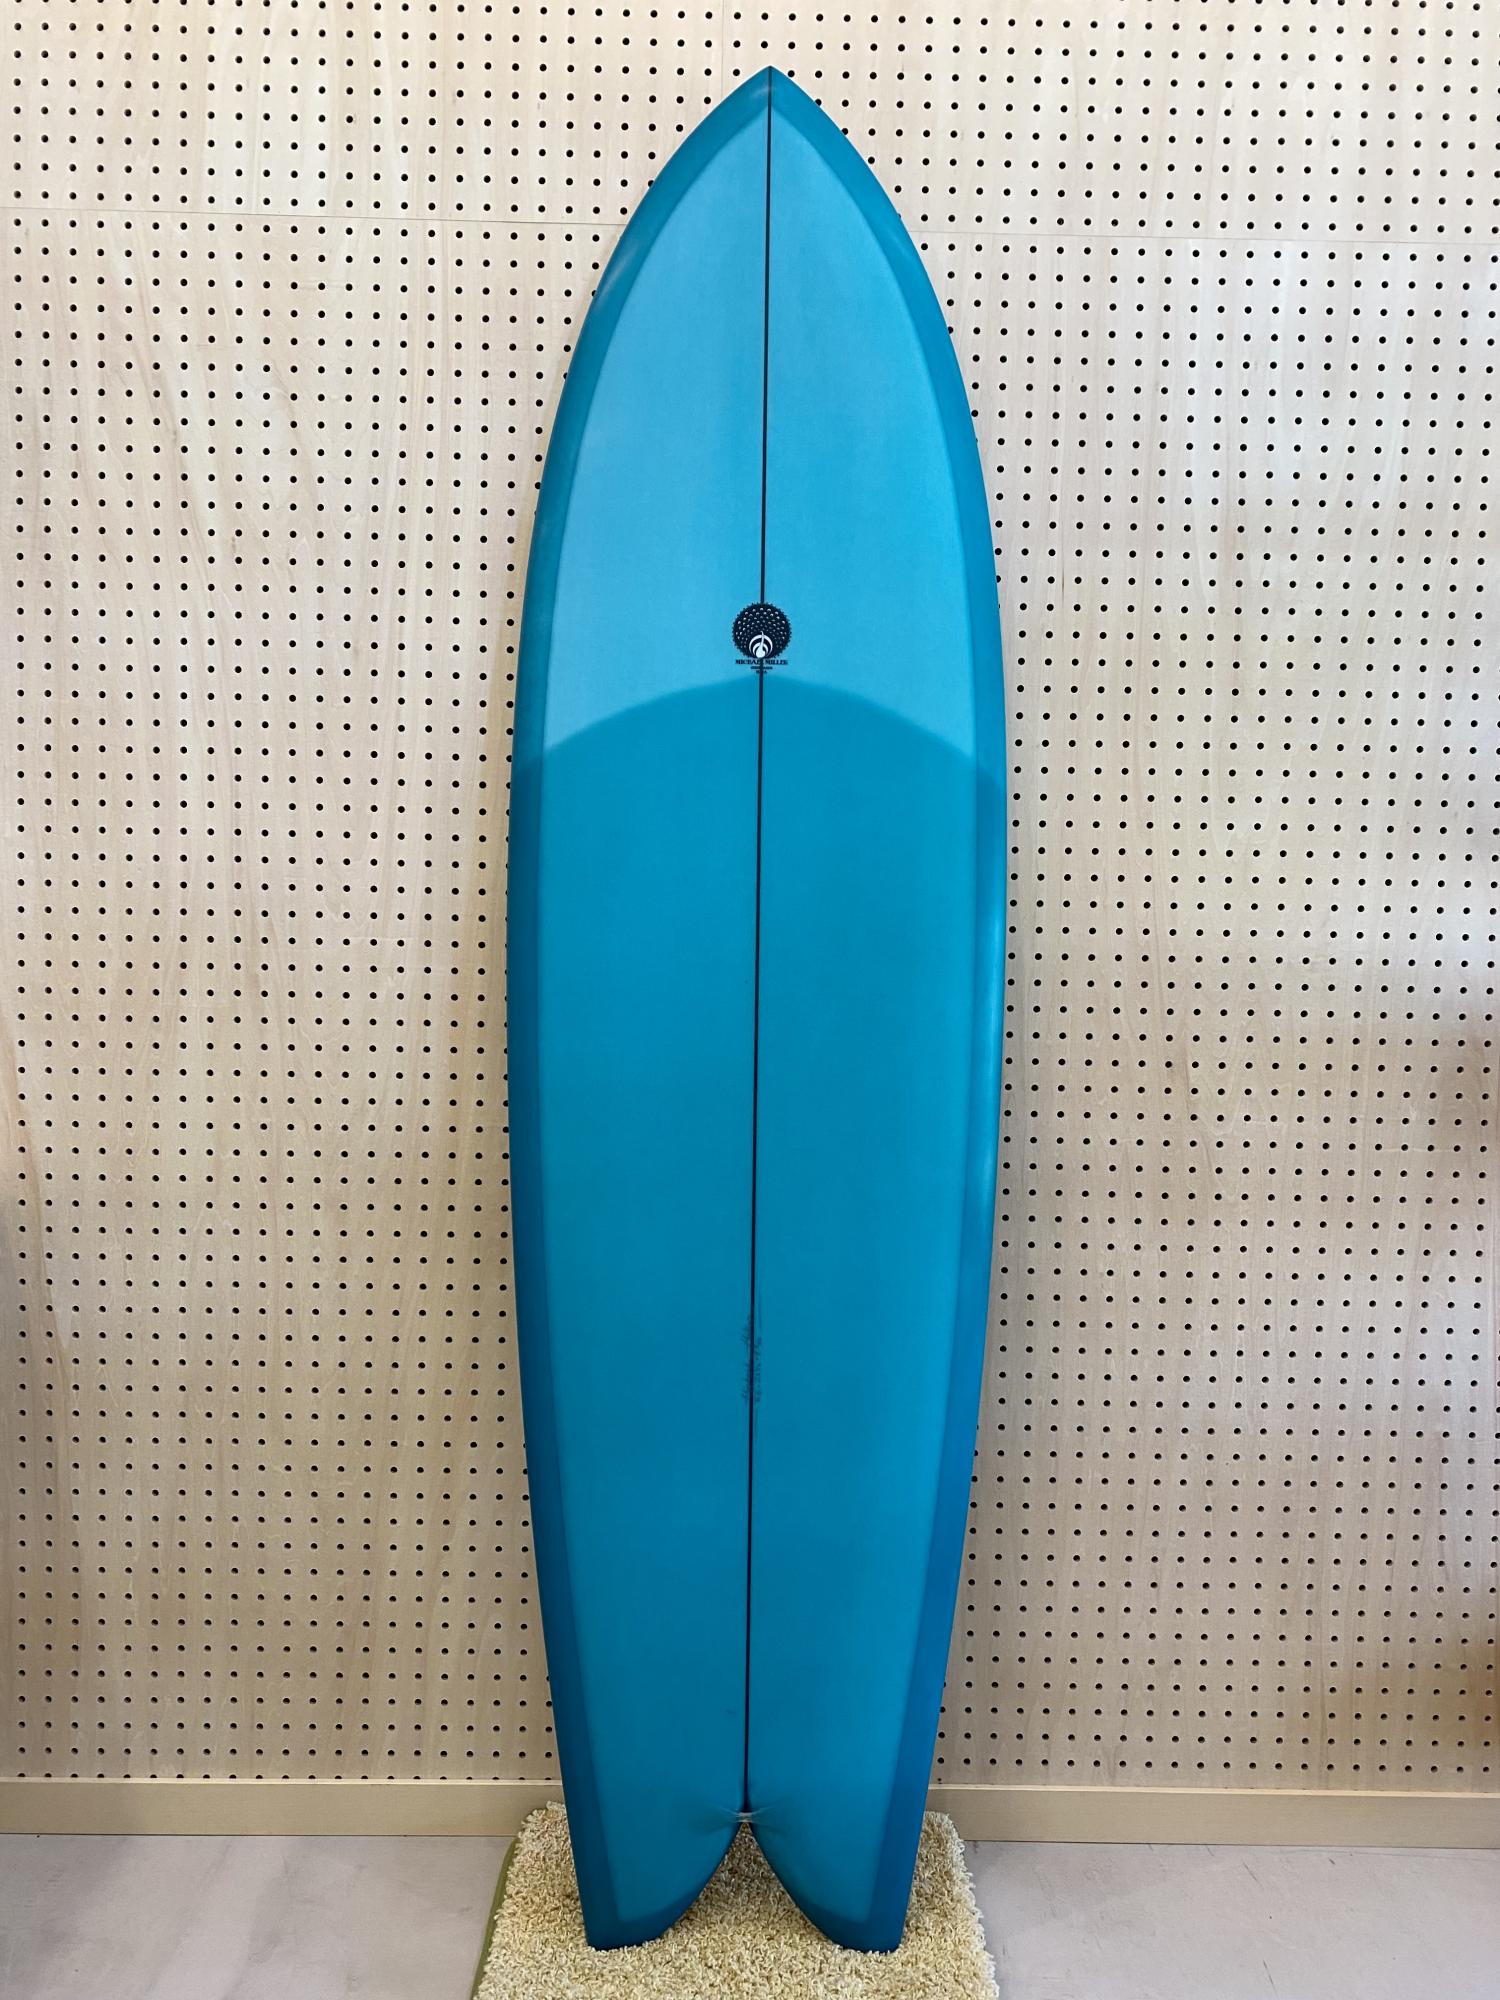 Michael Miller Surfboards|Okinawa surf shop YES SURF